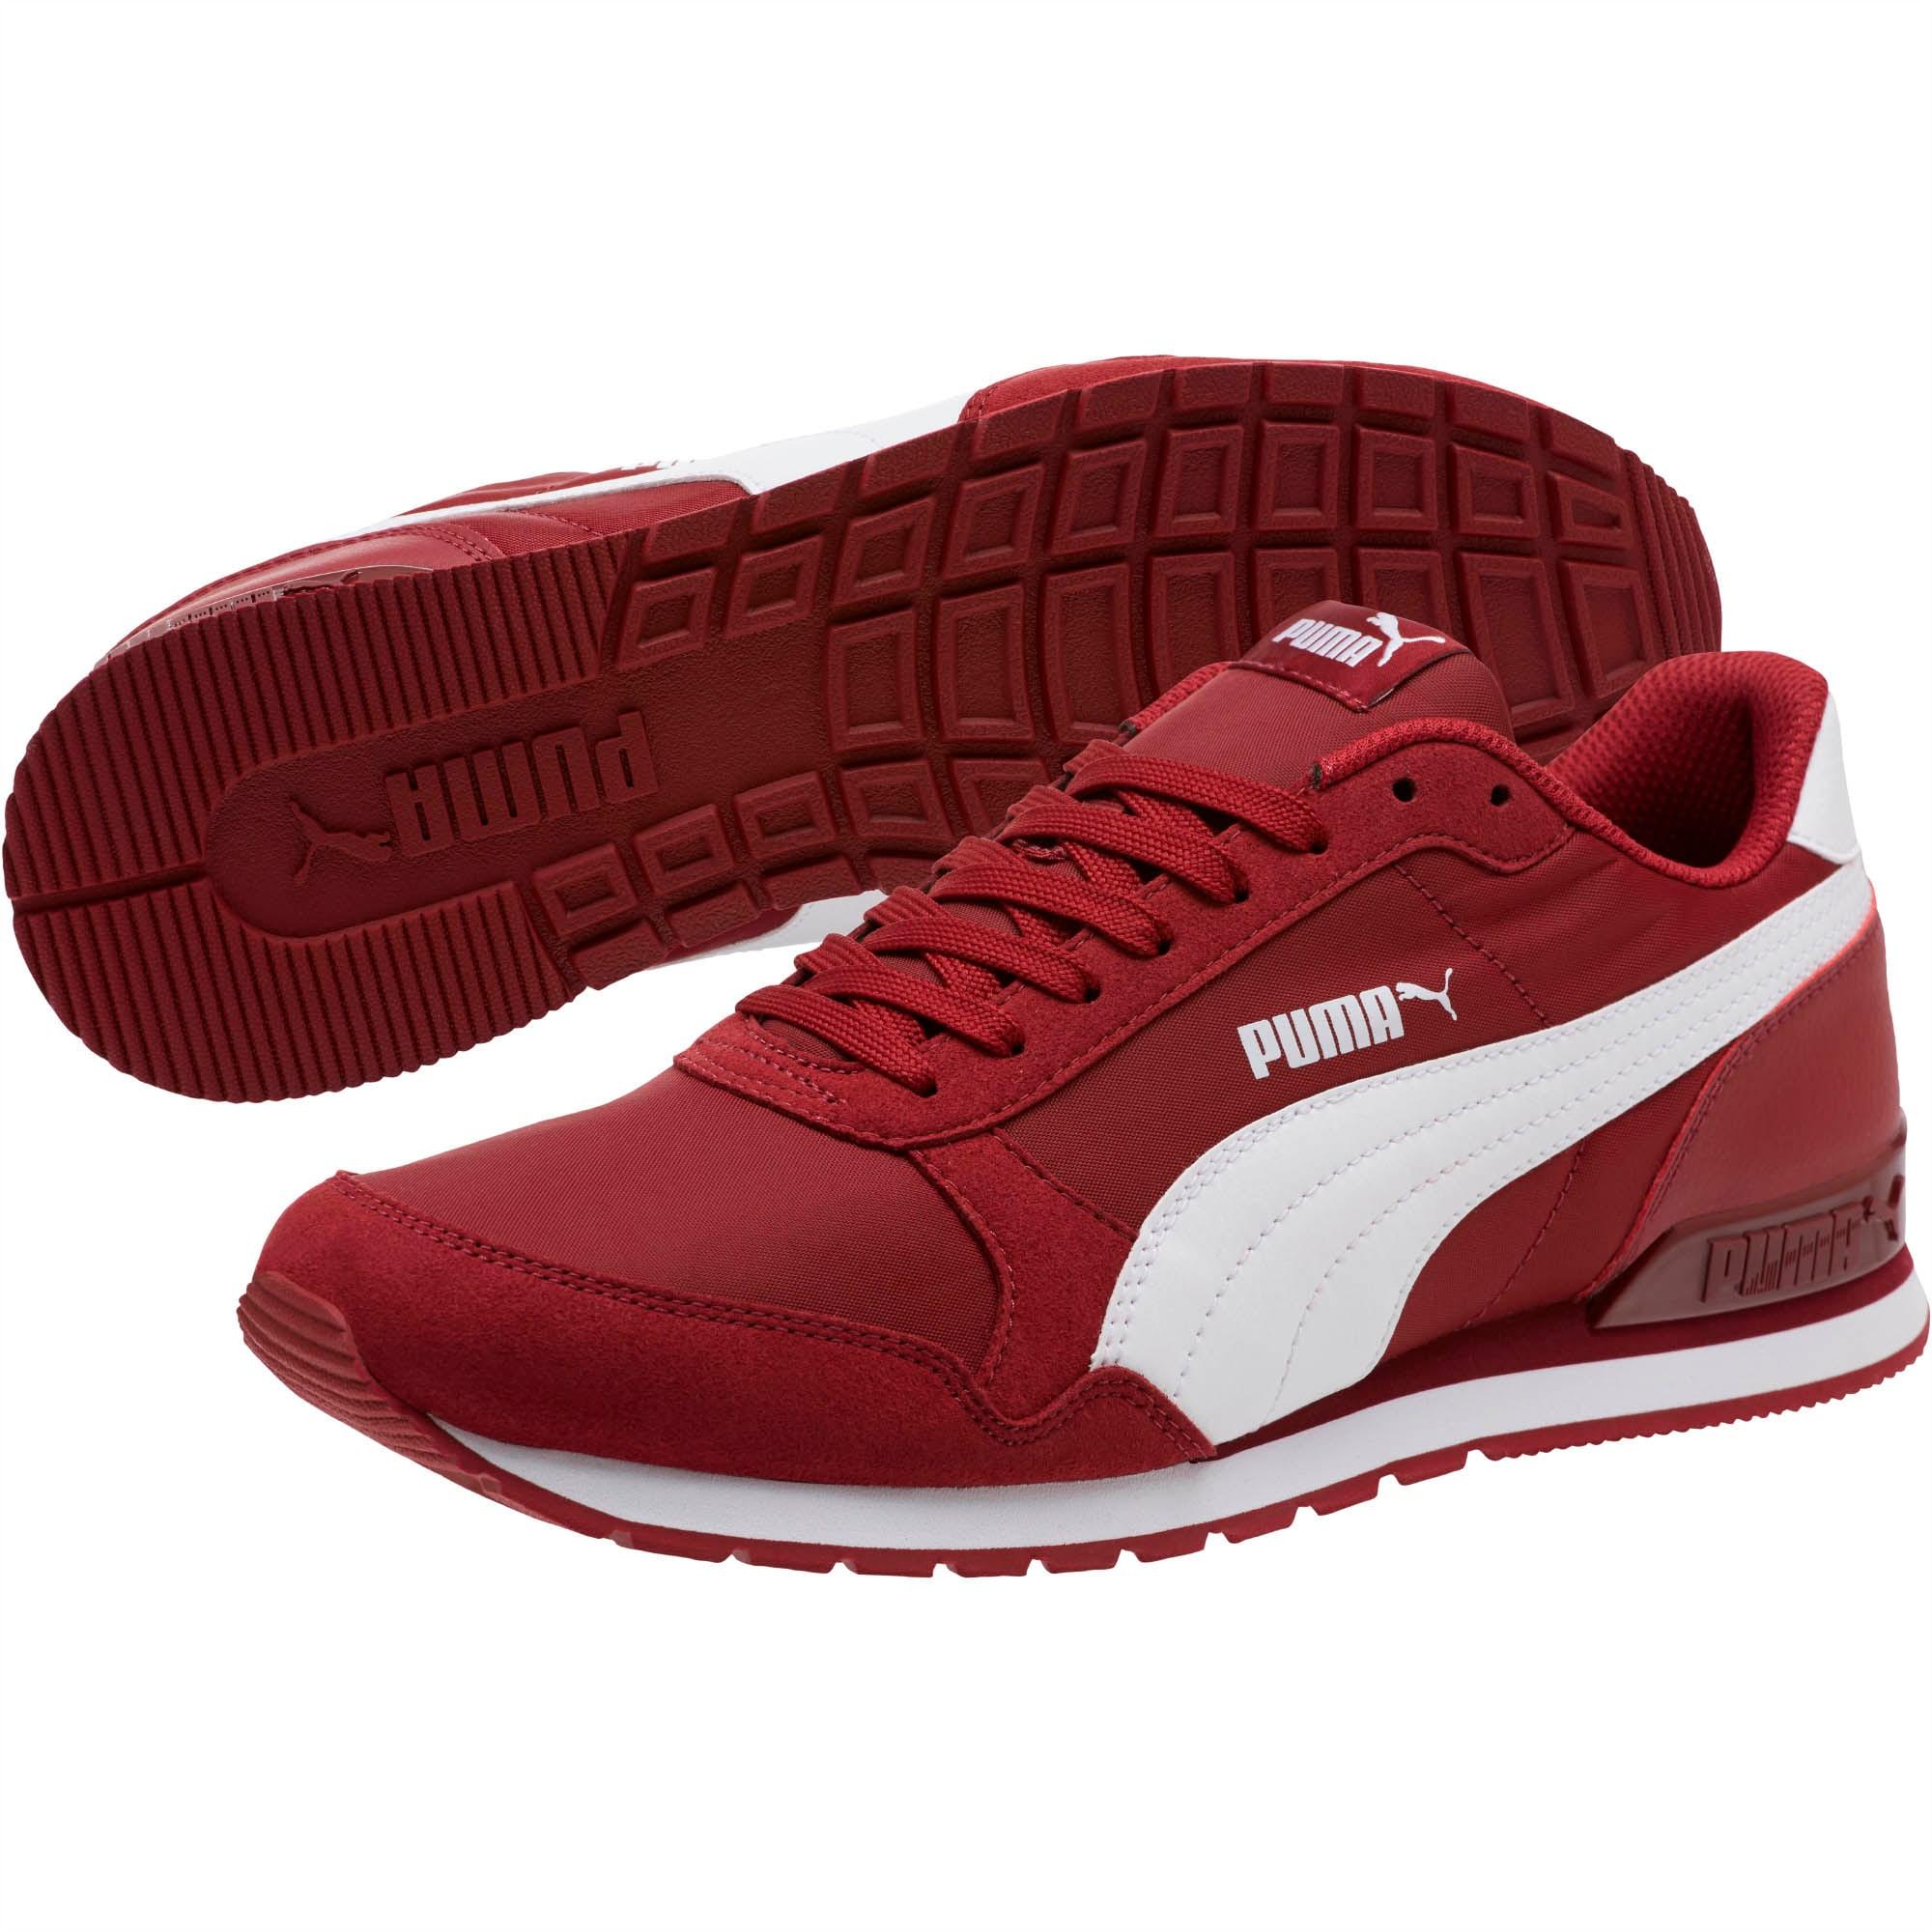 PUMA Synthetic St Runner V2 Sneaker in Red - Lyst